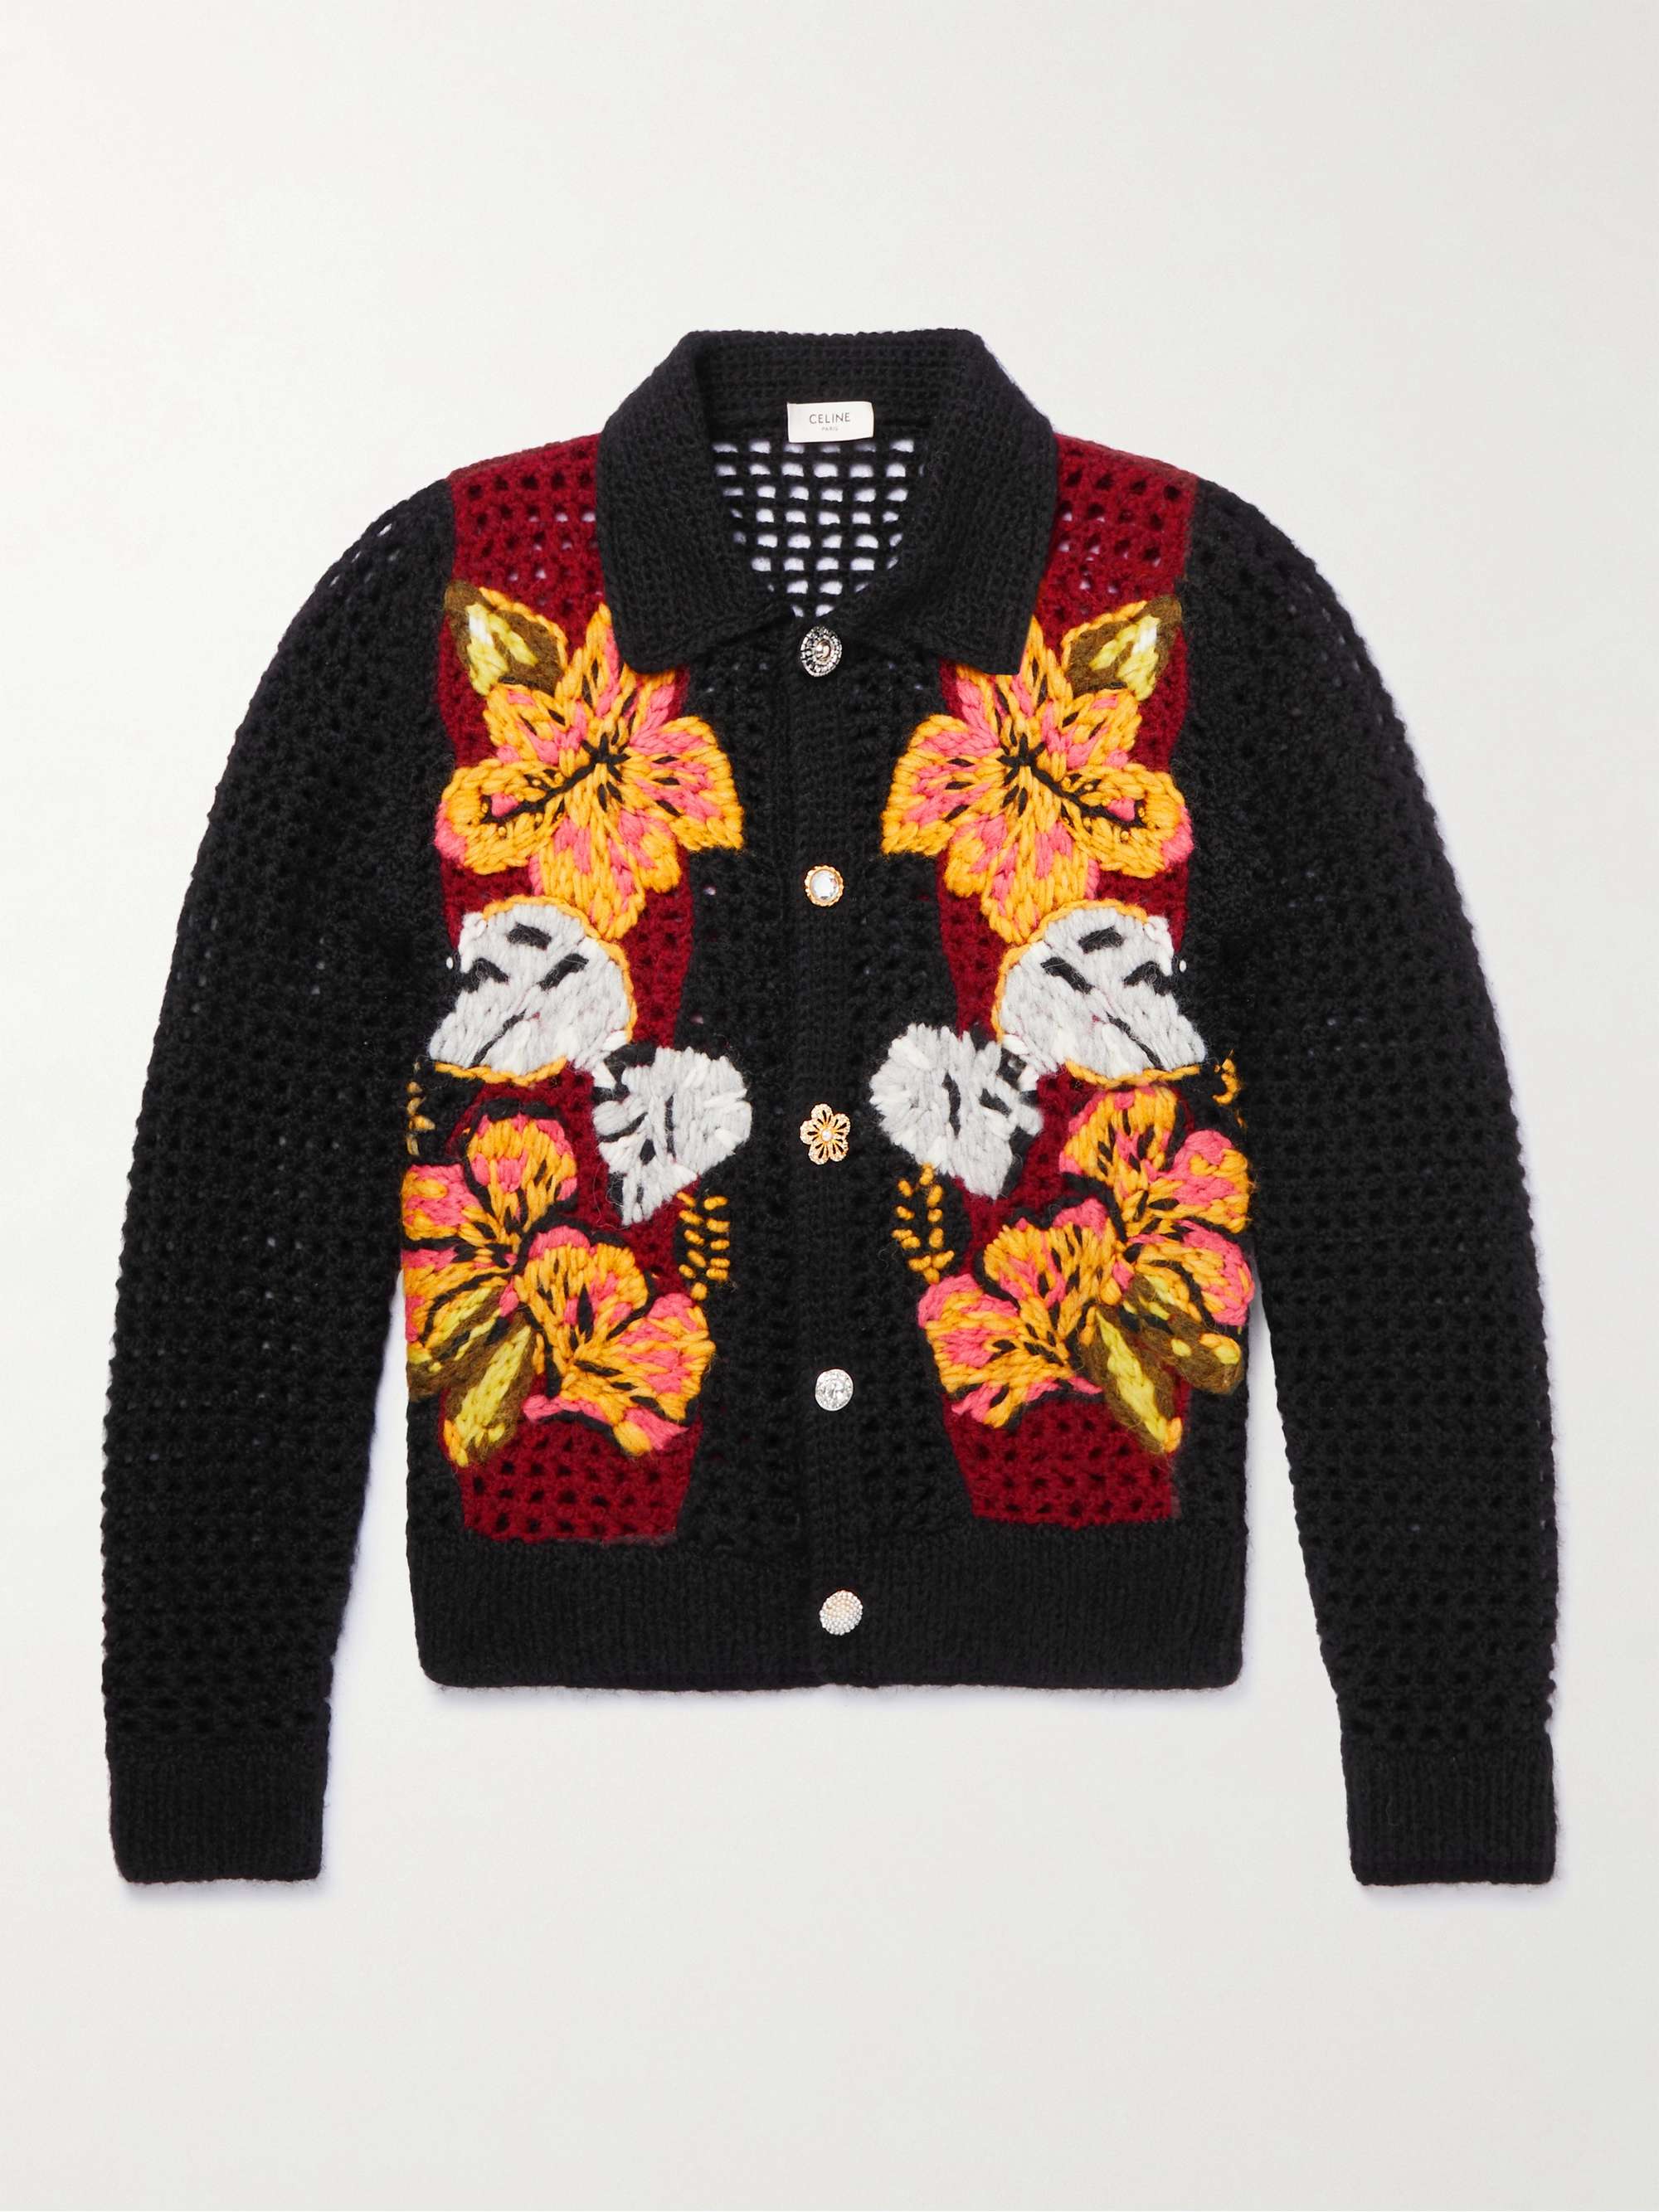 CELINE Embellished Crocheted Alpaca-Blend Cardigan